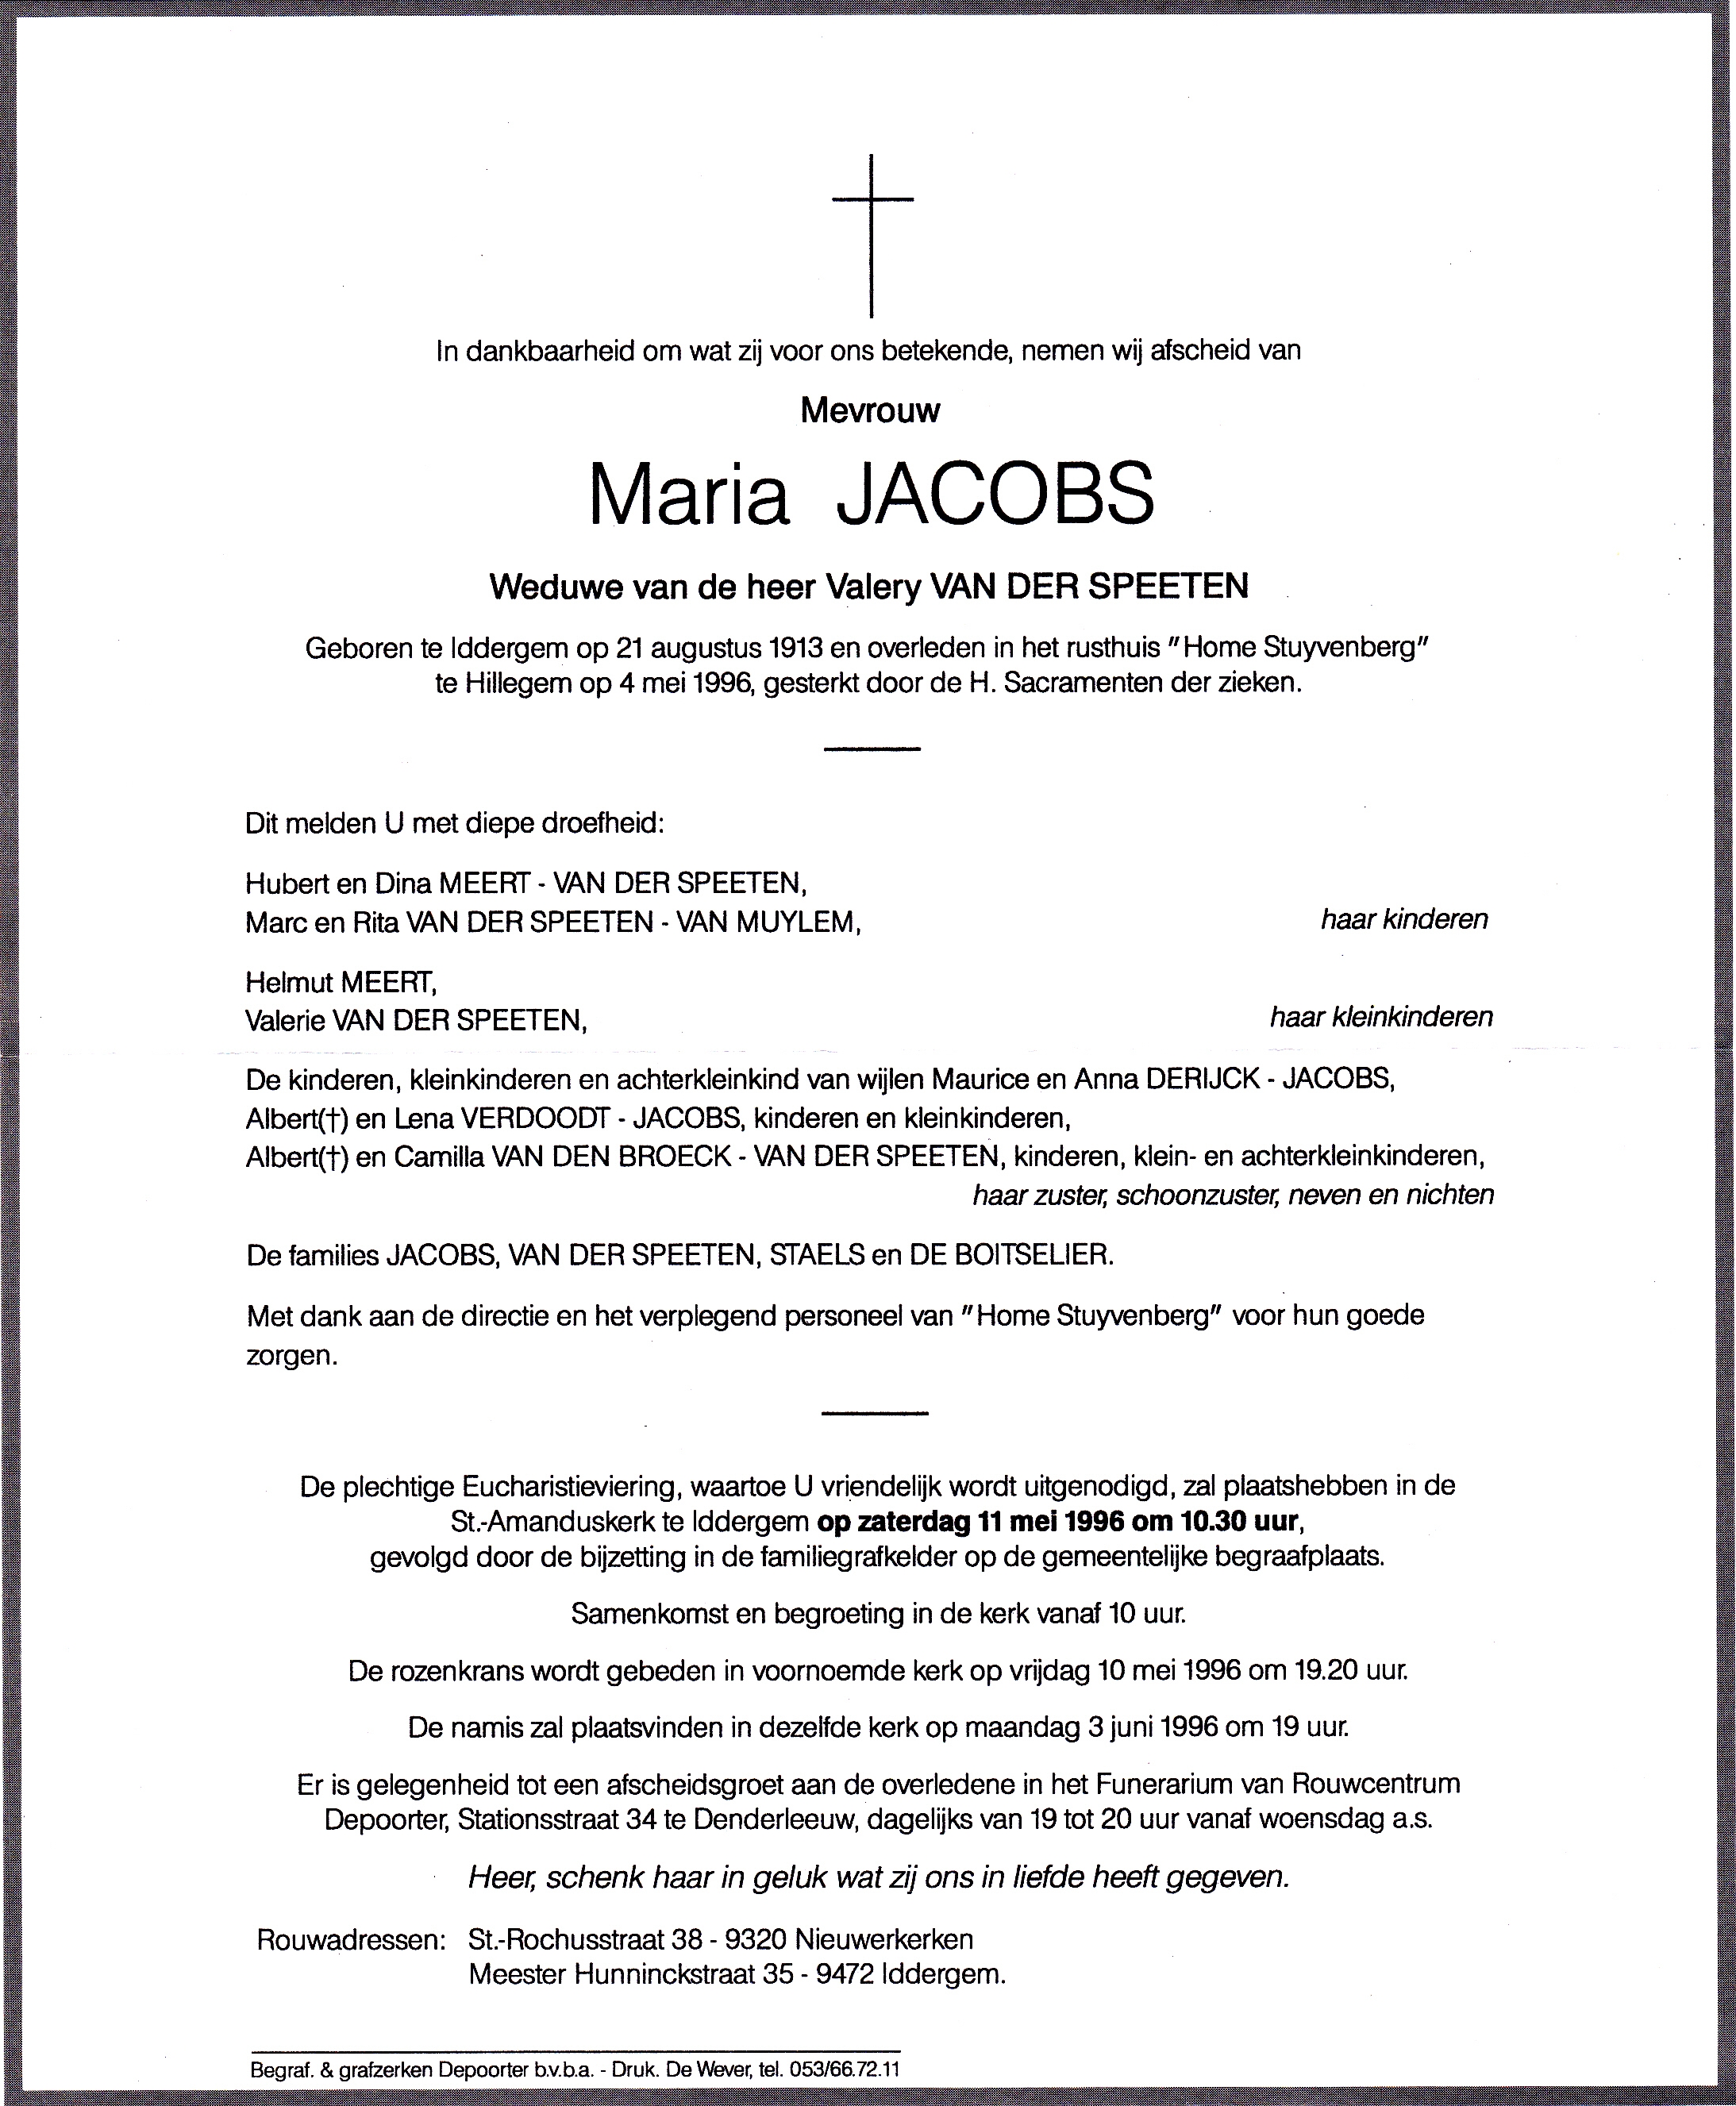 Jacobs Maria   